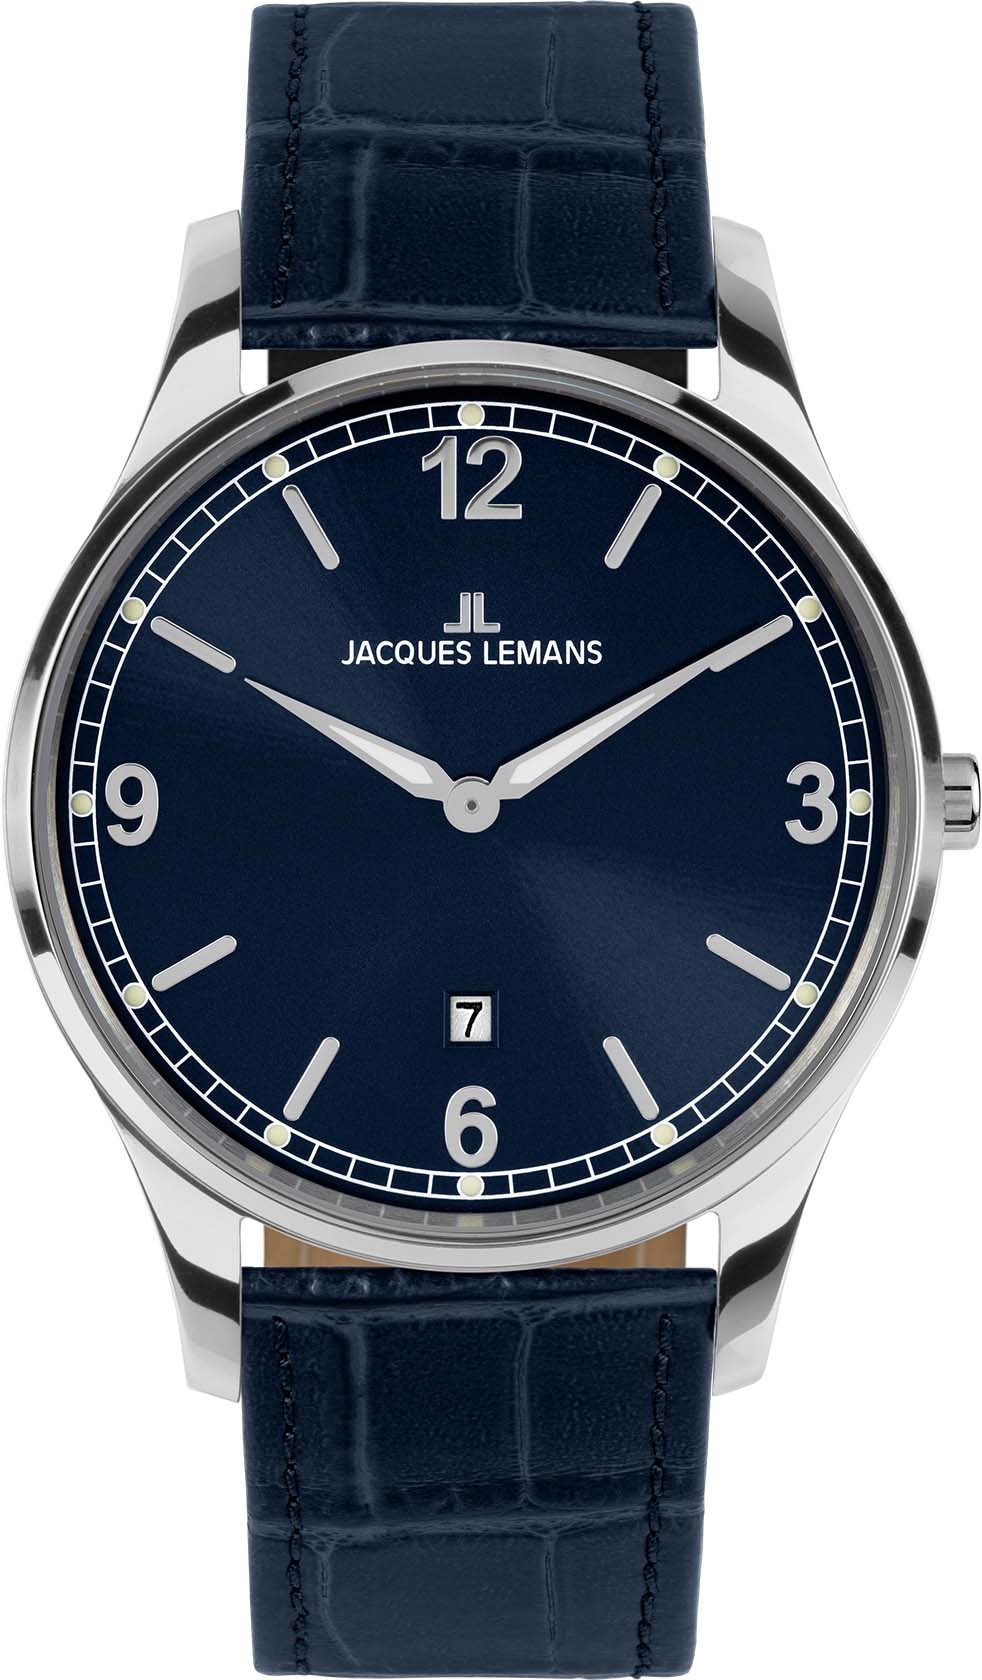 OTTO online Chronograph Jacques bestellen Lemans »Barcelona, 42-2B« bei